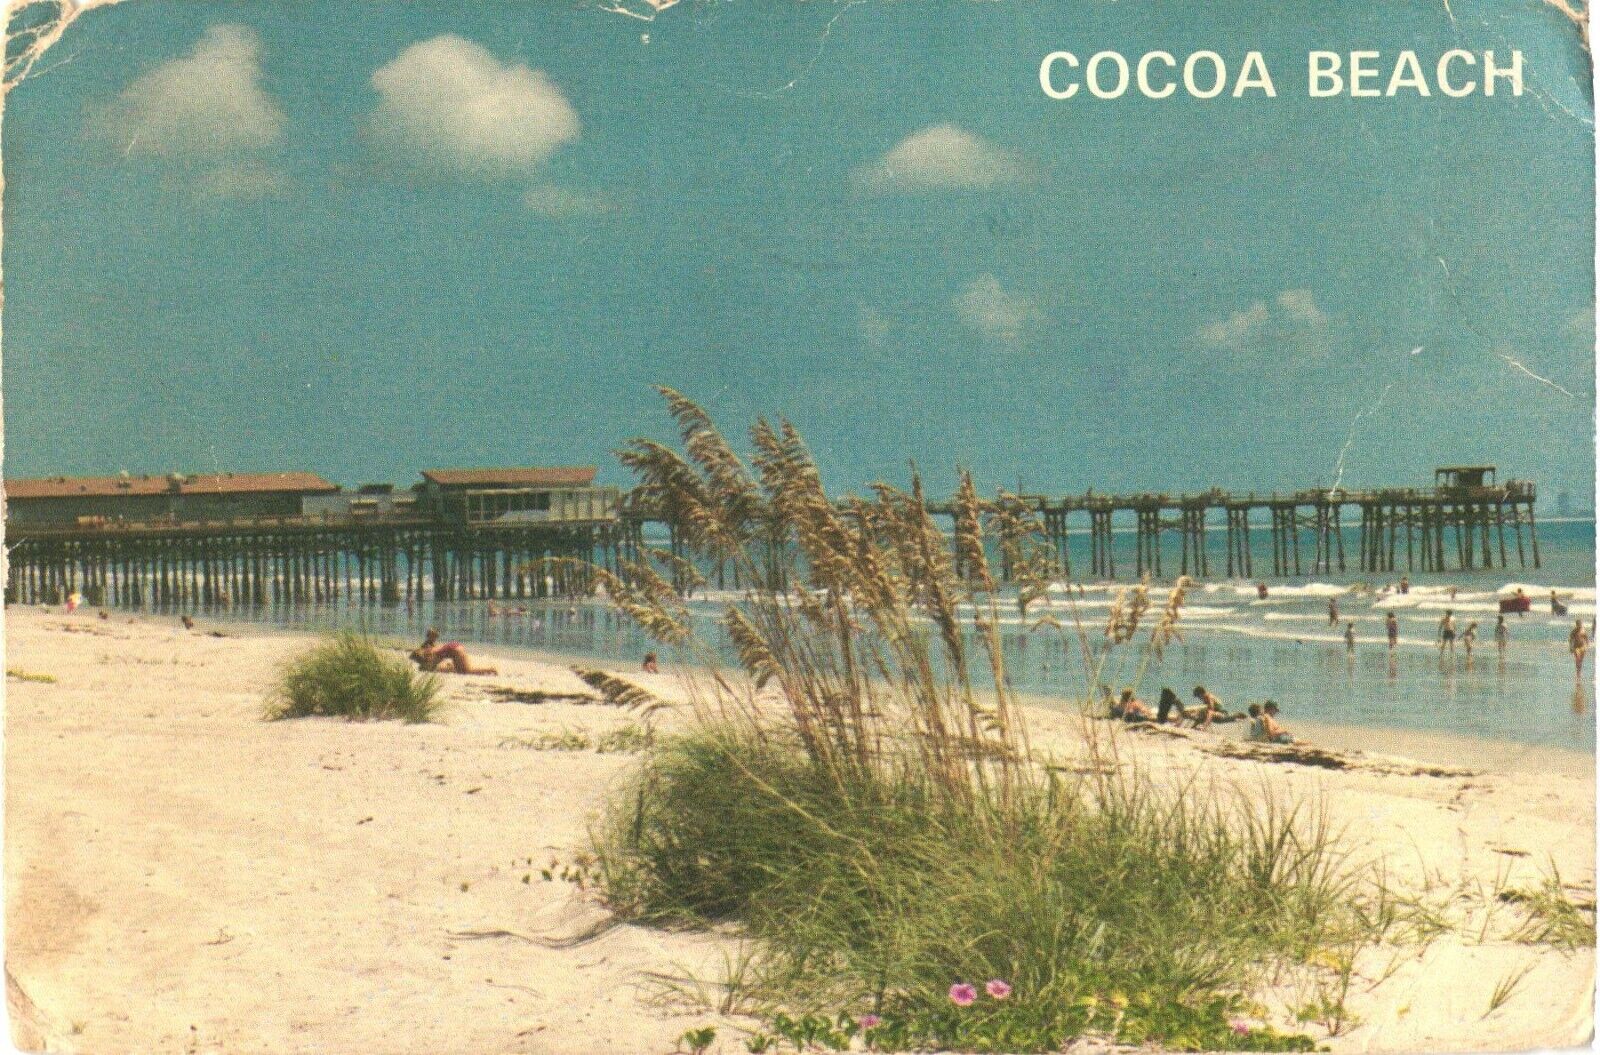 People Enjoying The Beautiful White Sand of Cocoa Beach, Florida Postcard